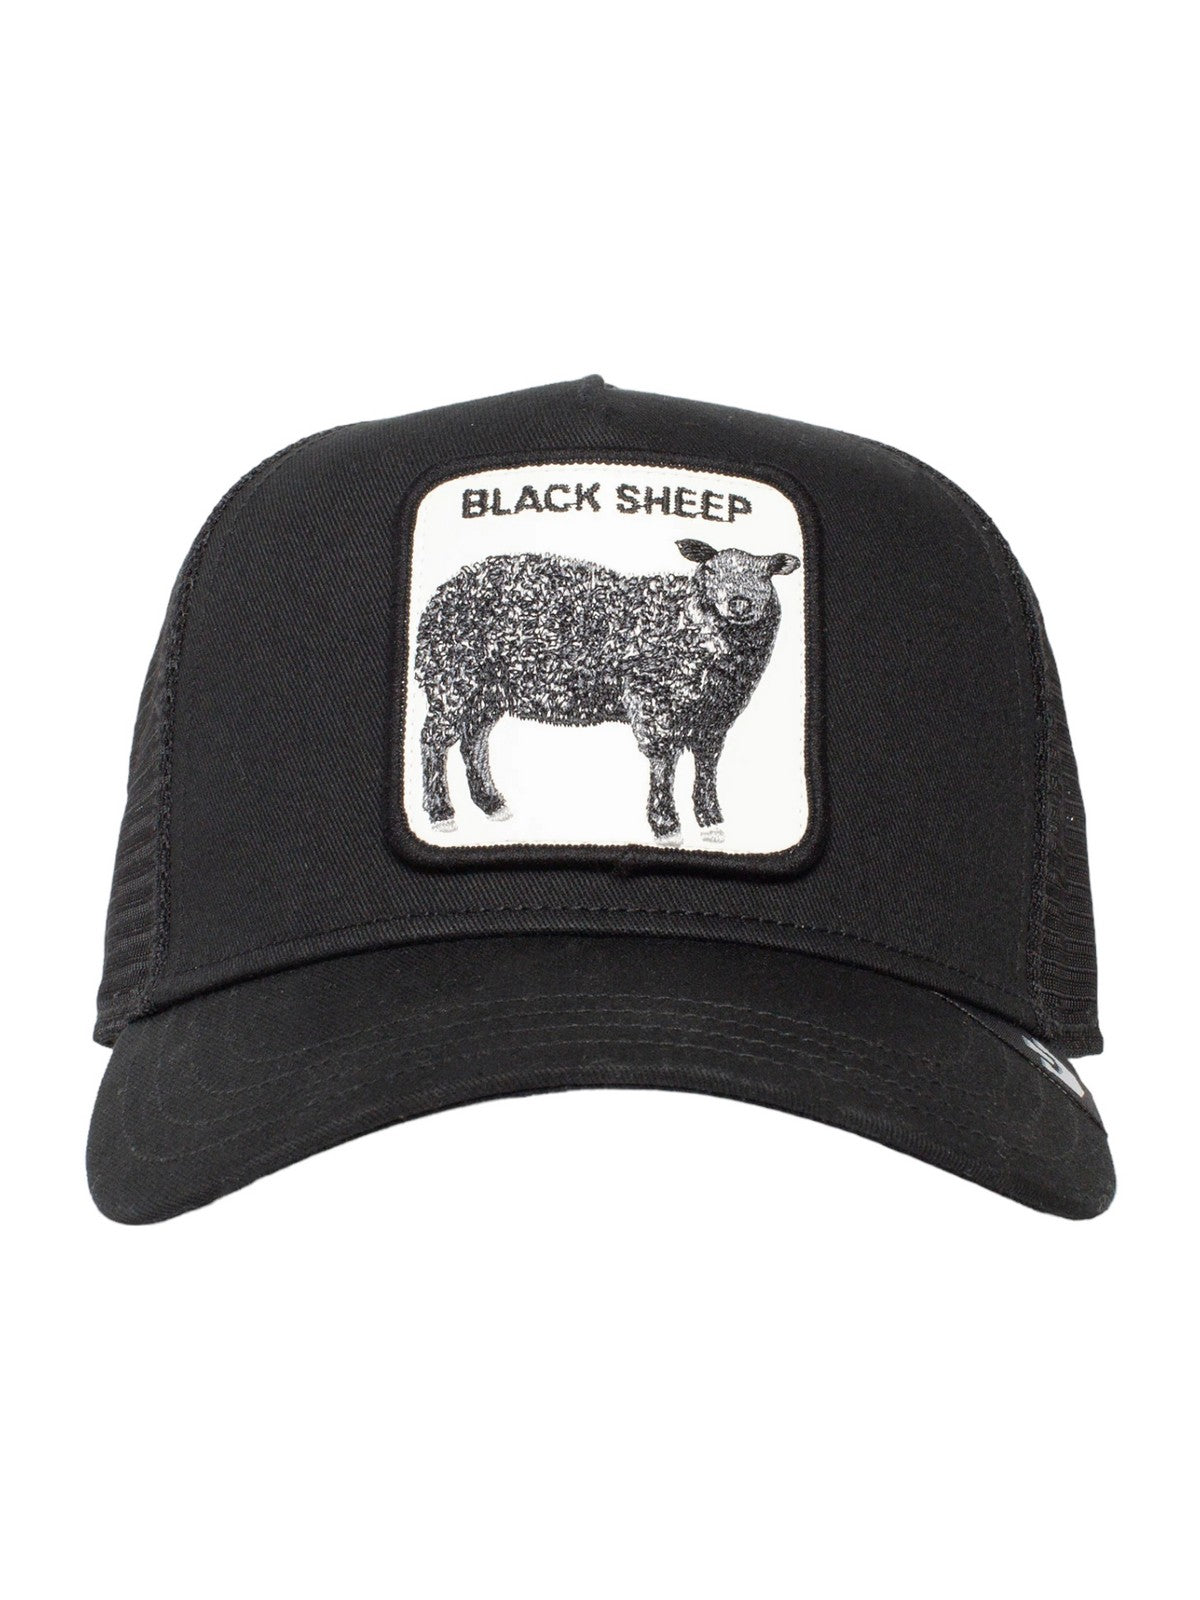 GOORIN BROS Cappello Uomo The black sheep 101-0380-BLK Nero